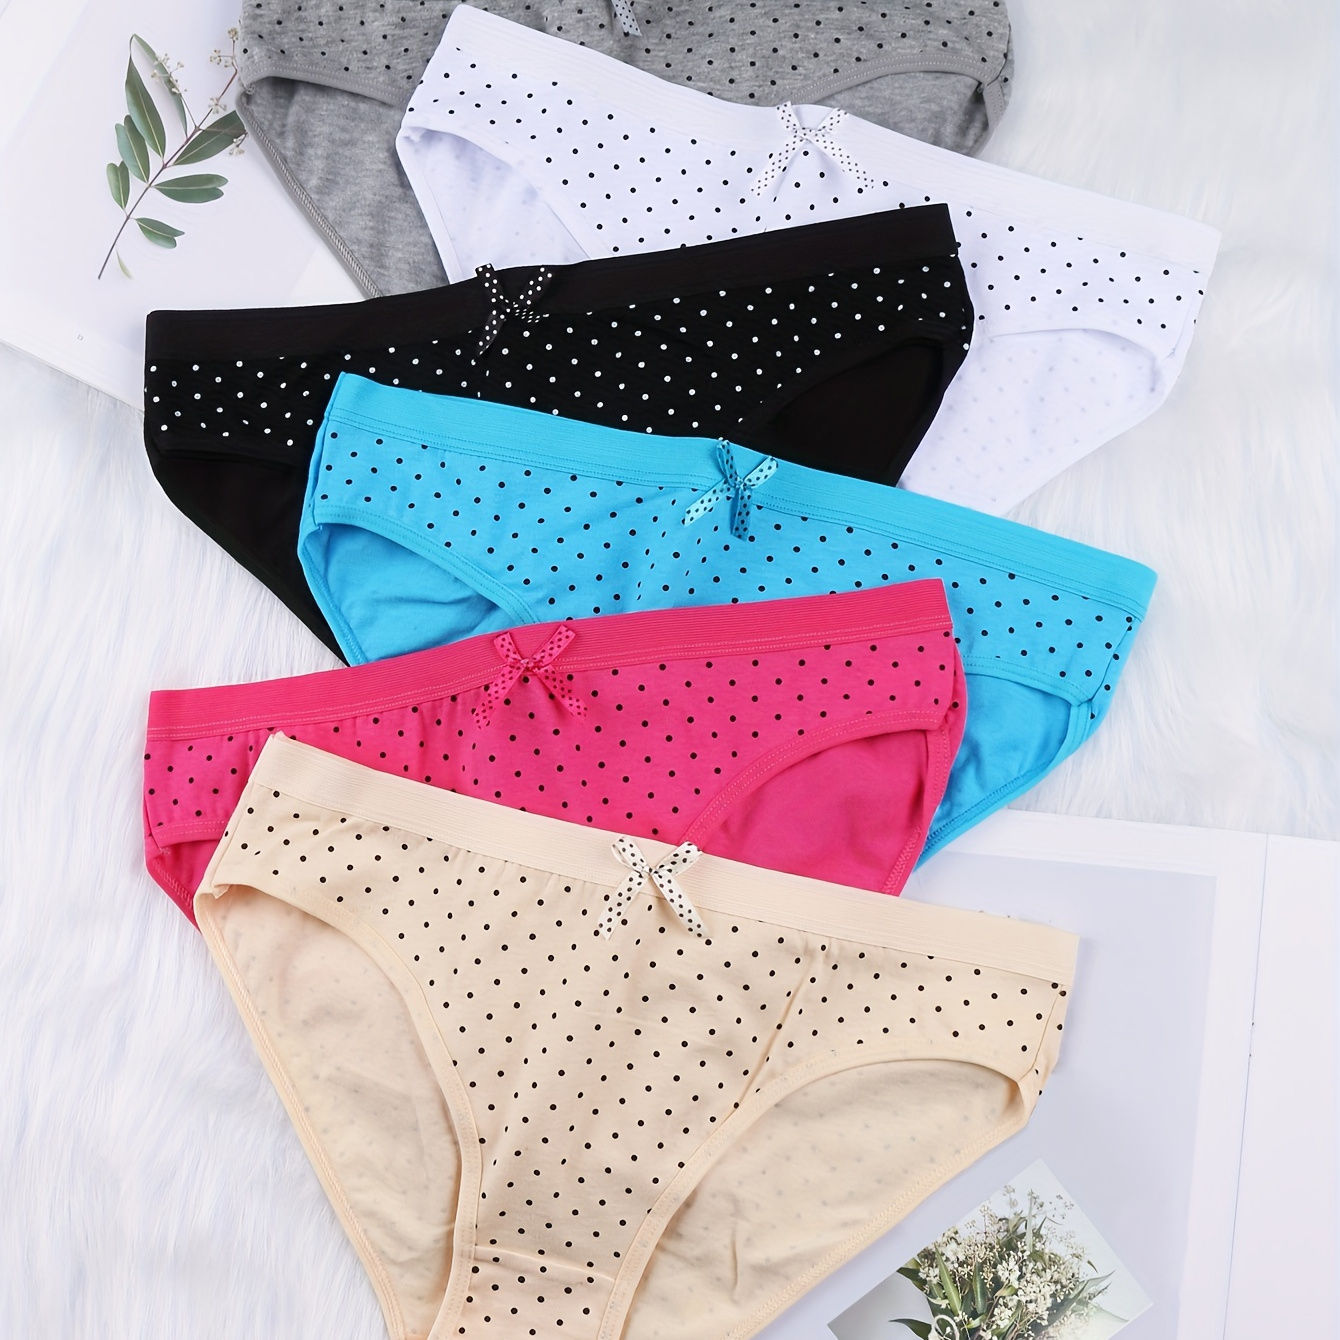 

[6 Pack] Colorful Cotton Panties, Assorted Colors Soft & Stretchy Bikini Briefs, Women's Lingerie & Underwear